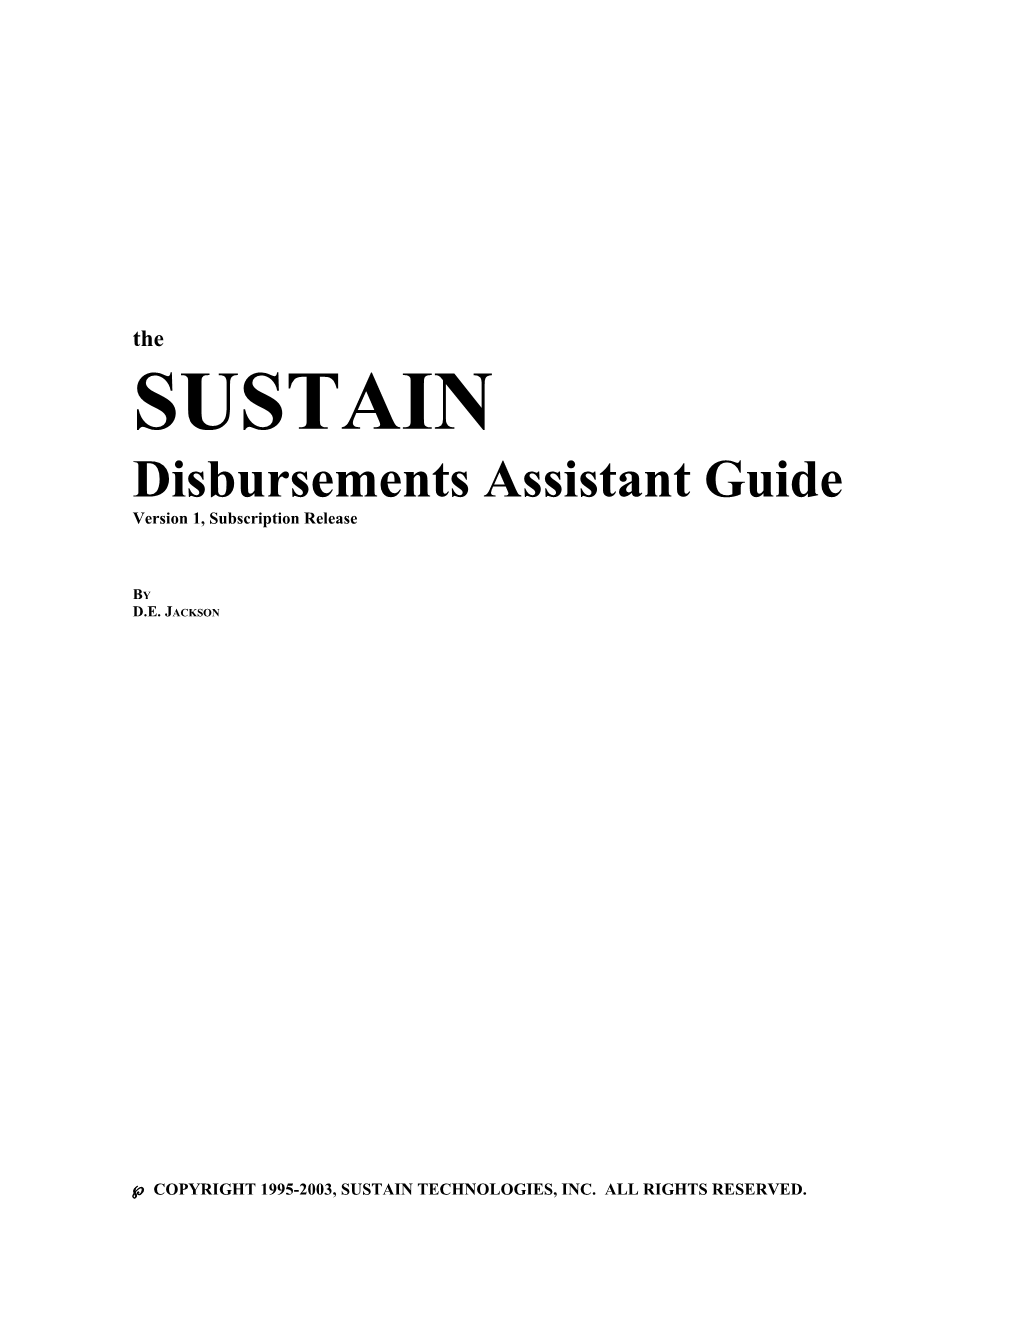 The SUSTAIN Disbursements Assistant Guide